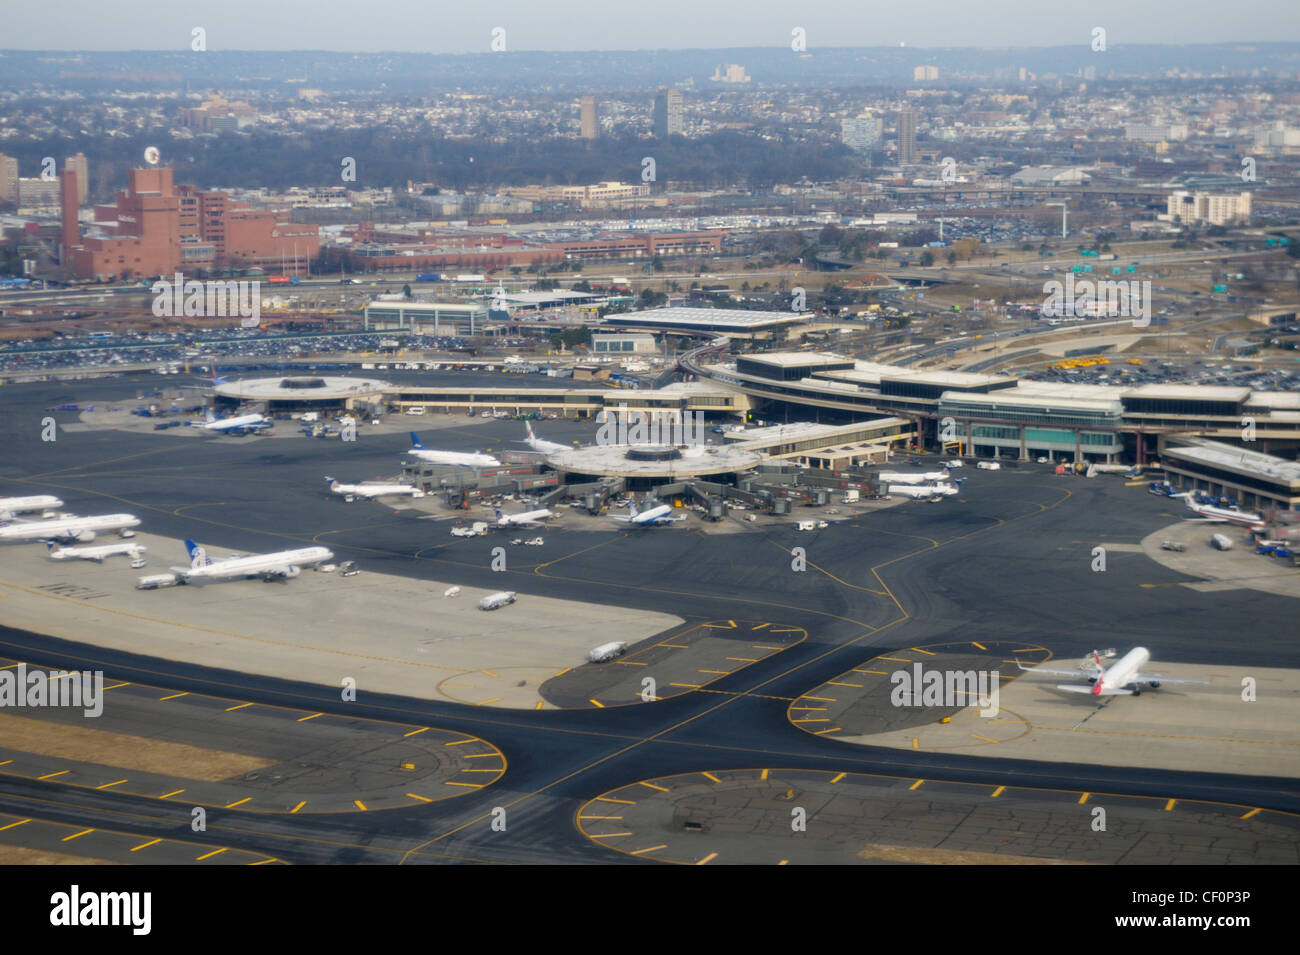 L'aéroport international Newark Liberty - New Jersey - à partir de l'air Banque D'Images